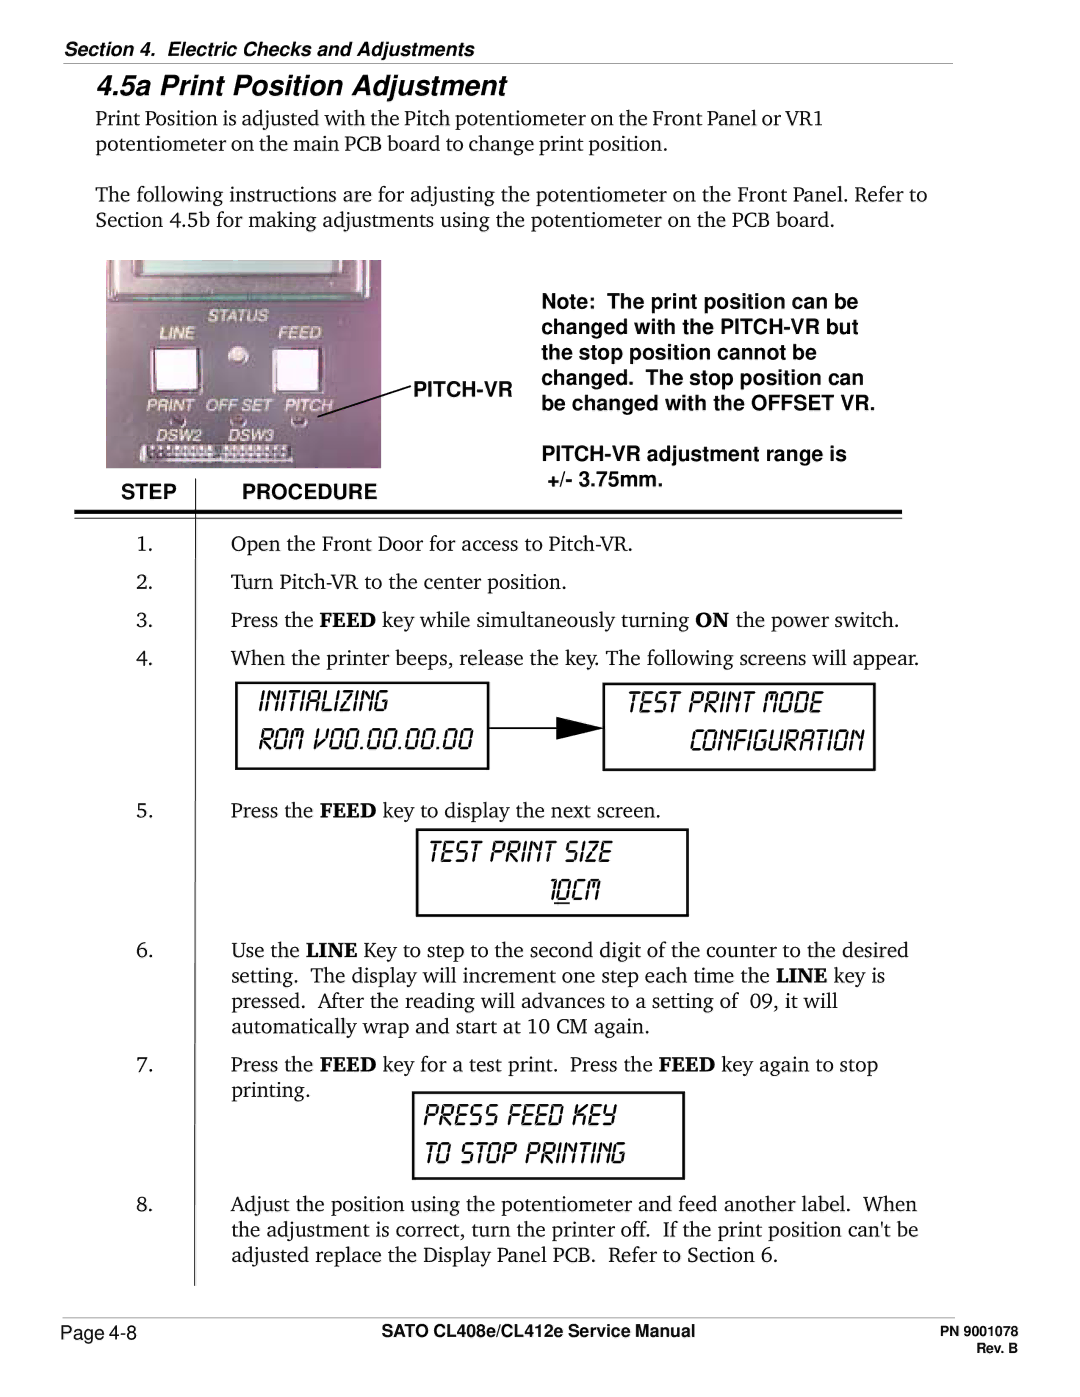 SATO CL412E service manual 5a Print Position Adjustment, PITCH-VR Step Procedure 